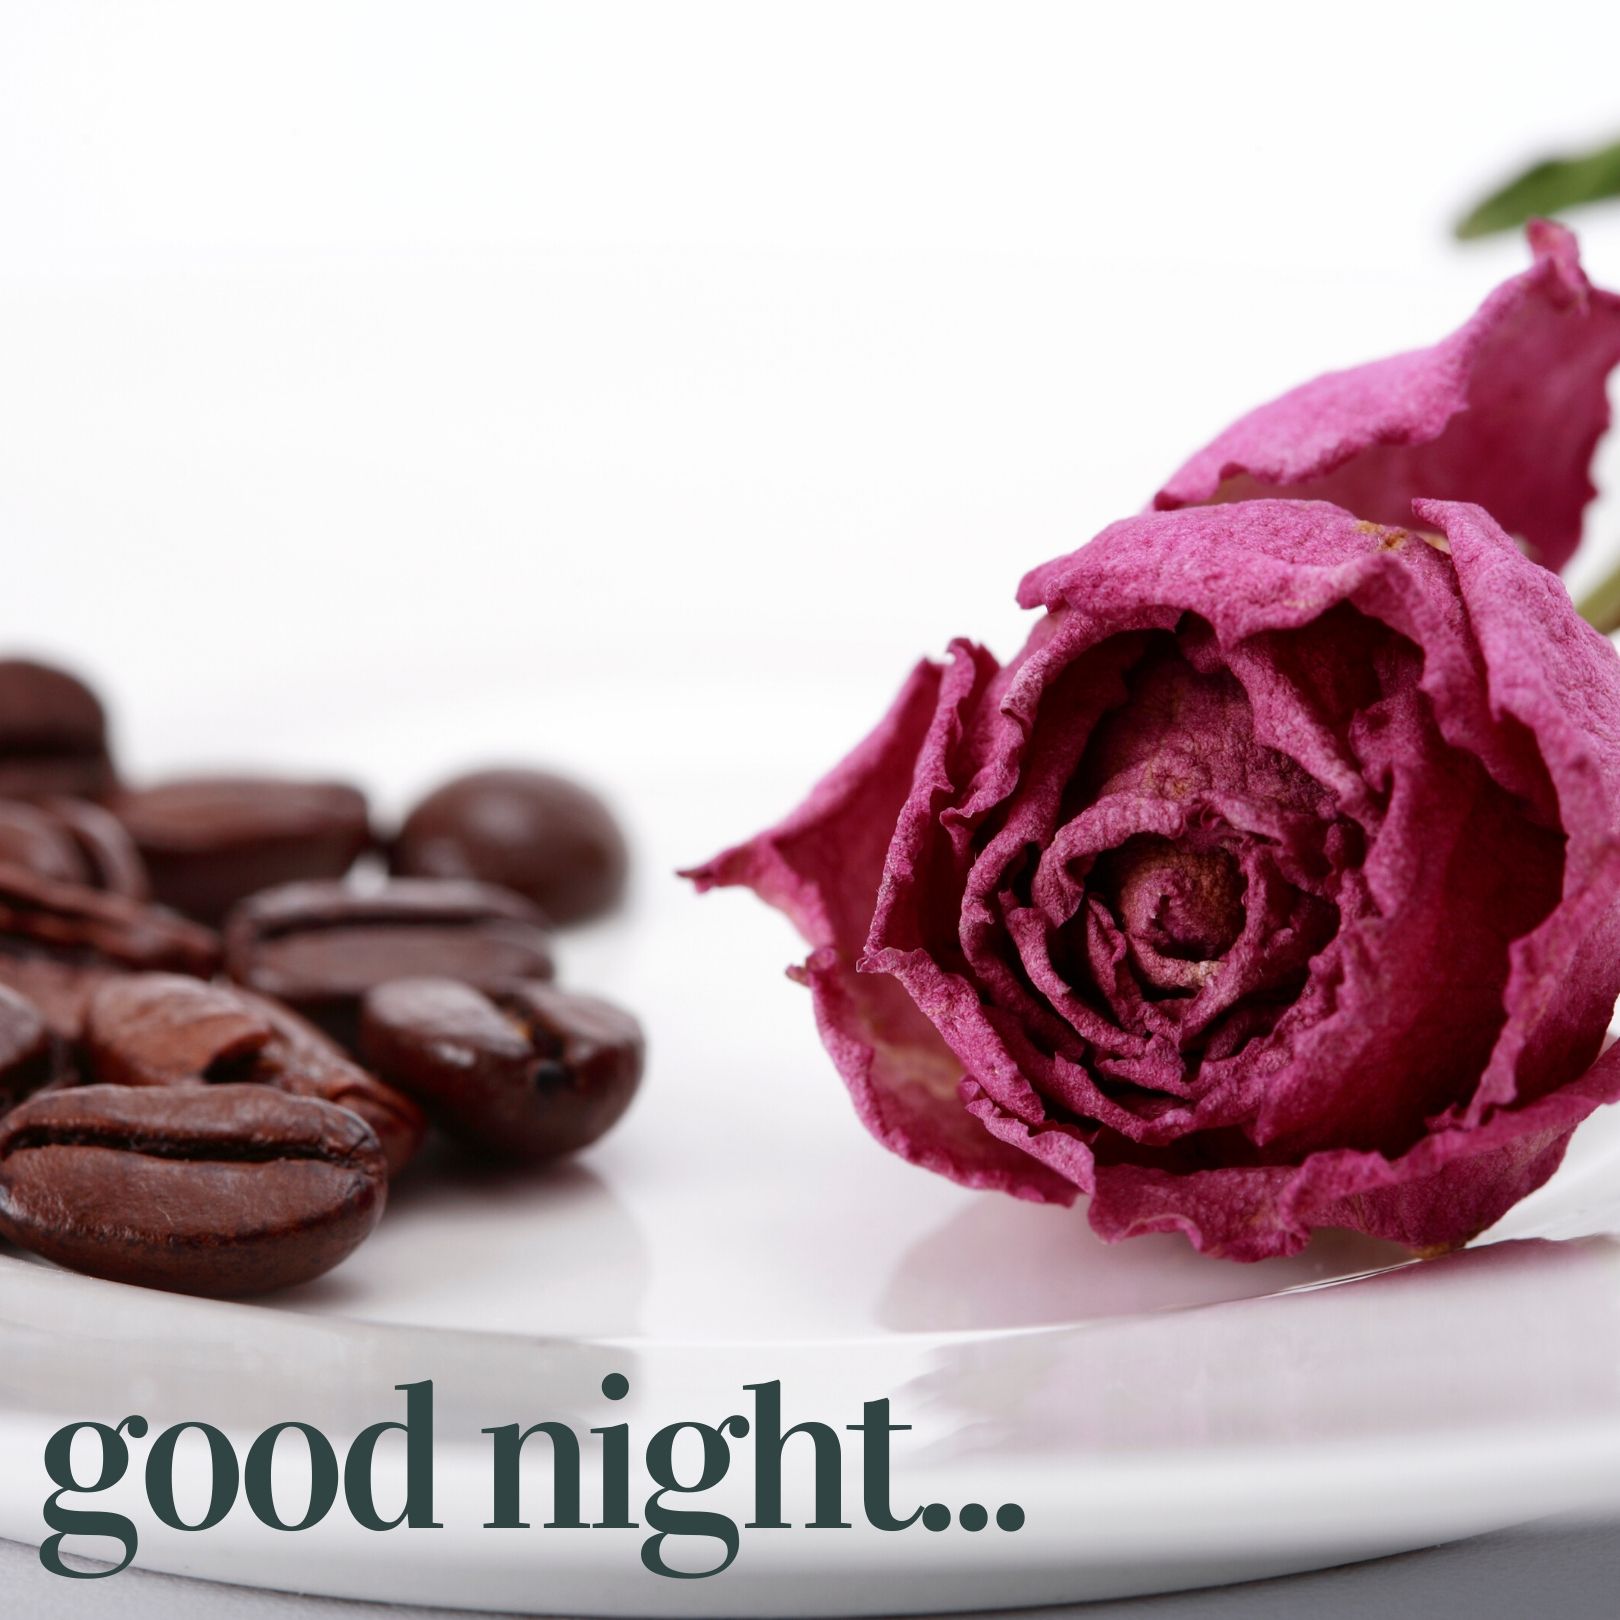 🔥 Good Night pic Download free - Images SRkh